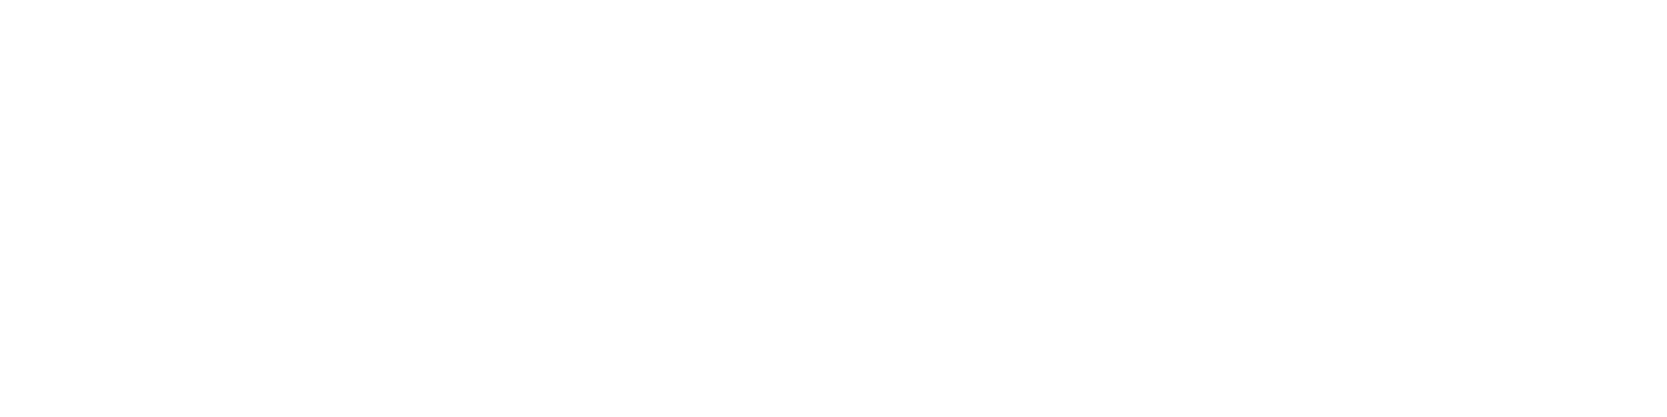 Faith Evangelical Lutheran Chruch